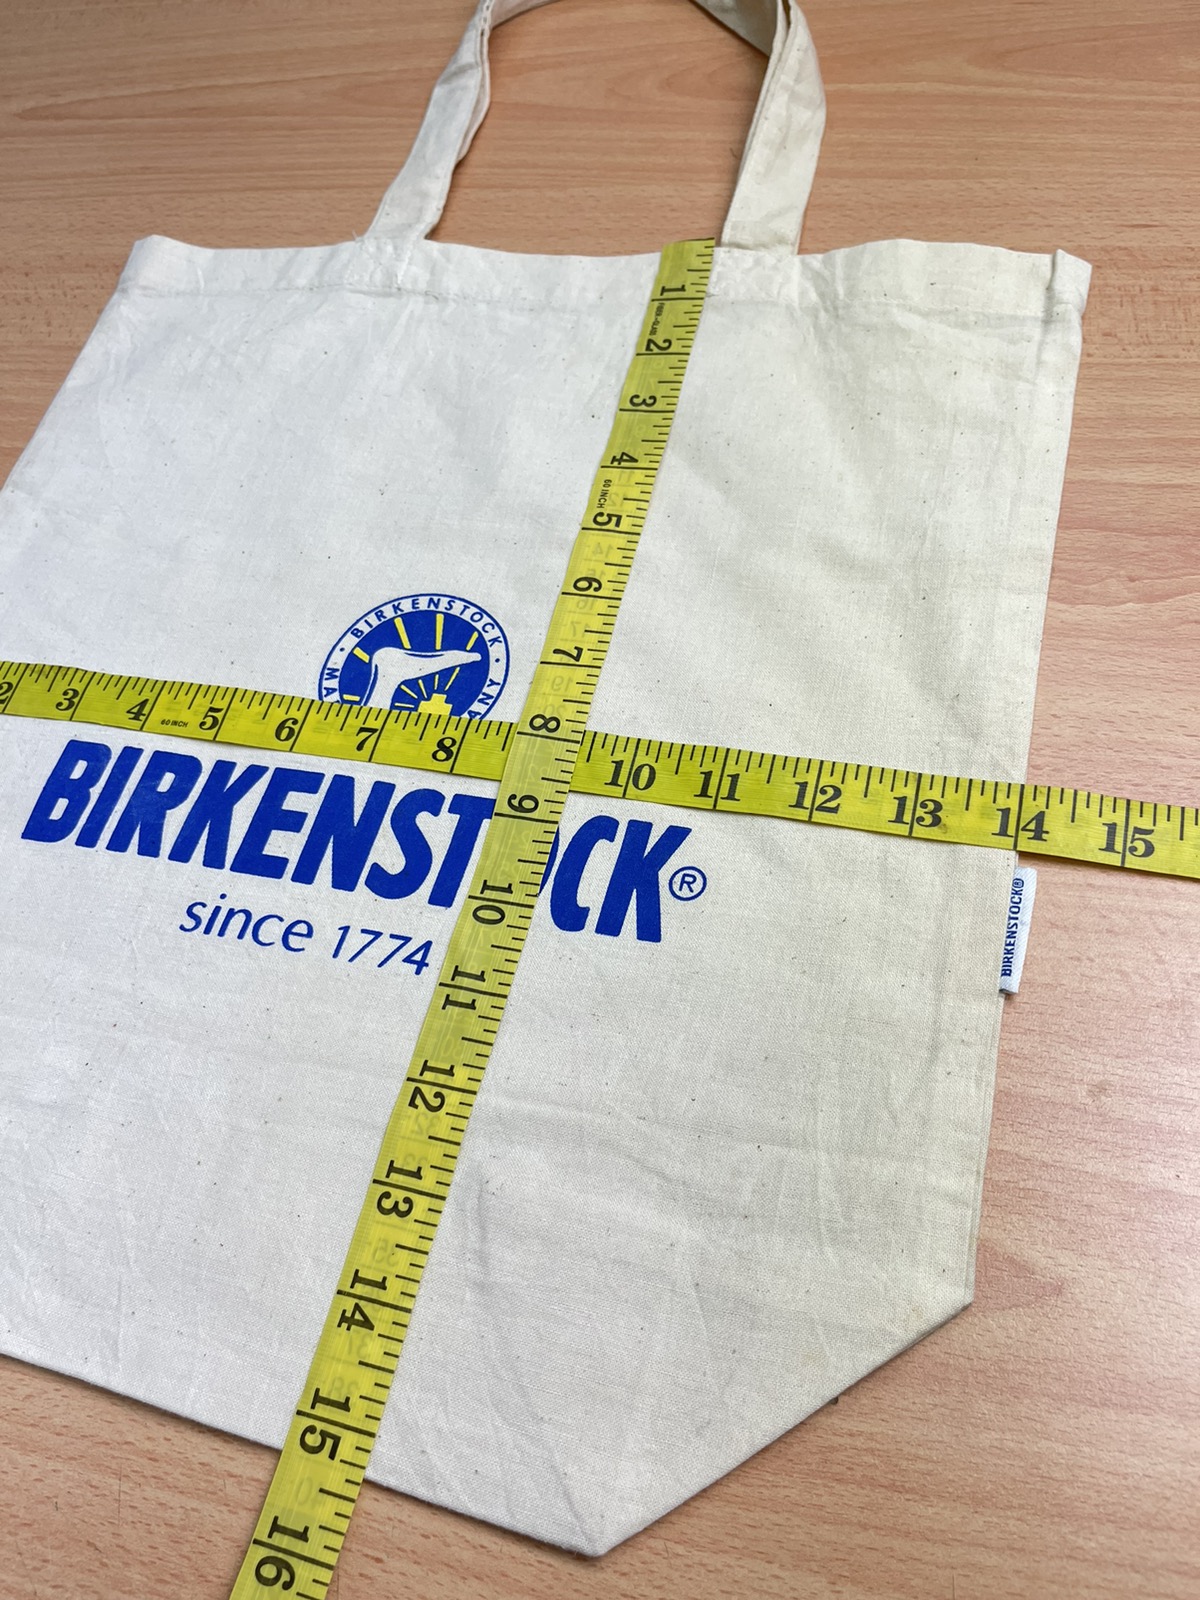 Birkenstock Tote Bag T2 - 14